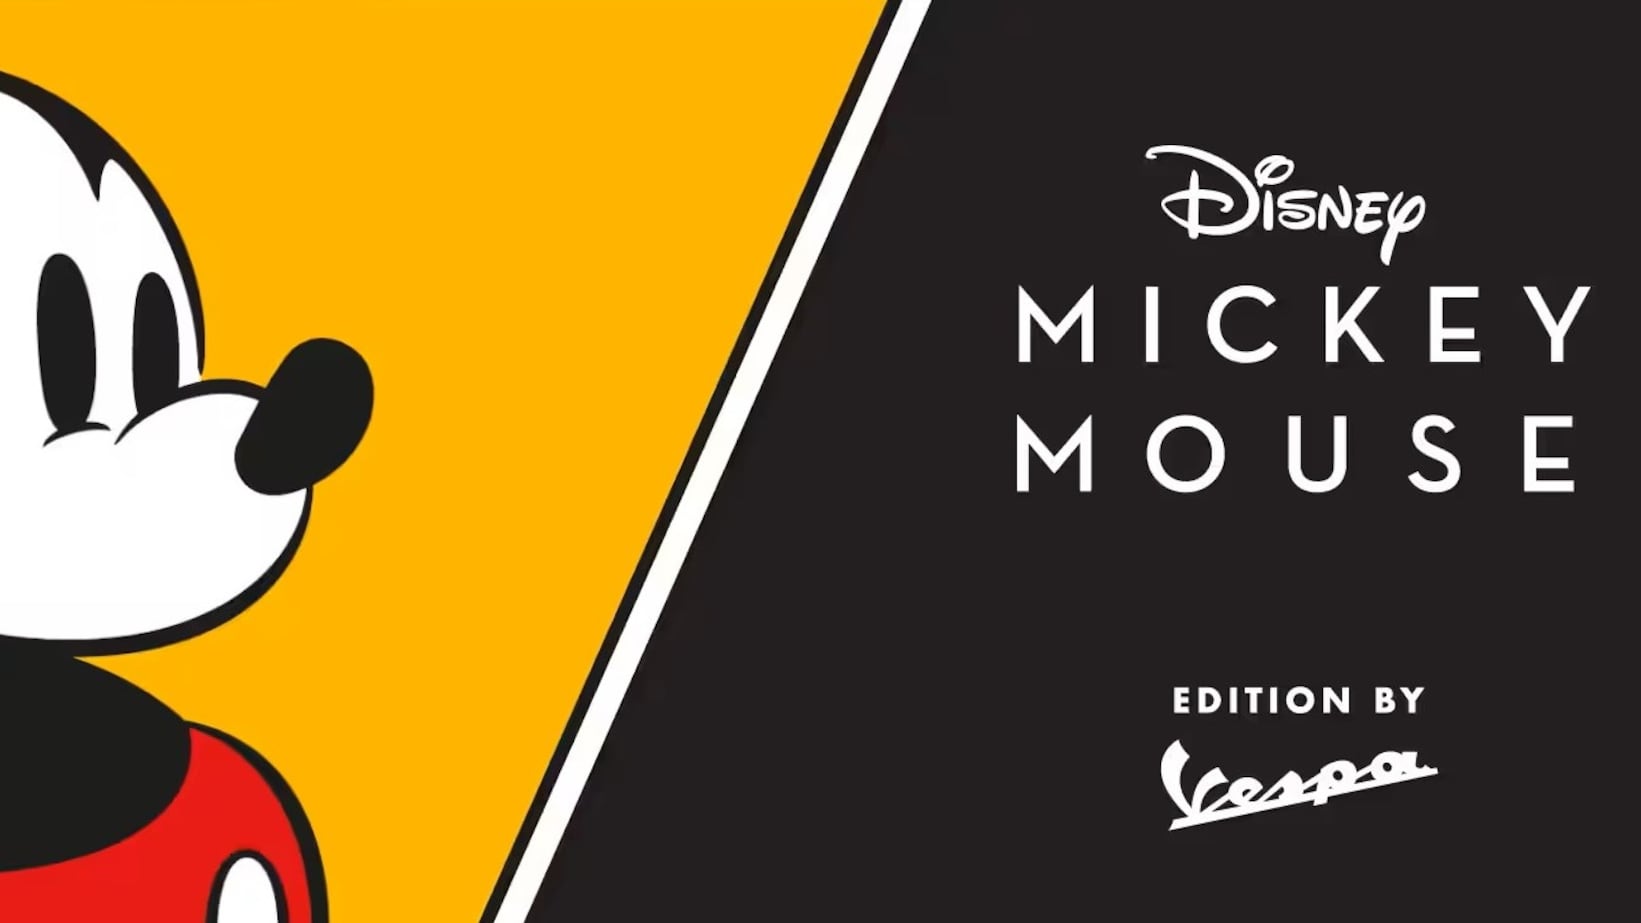 Disney Mickey Mouse Edition by Vespa